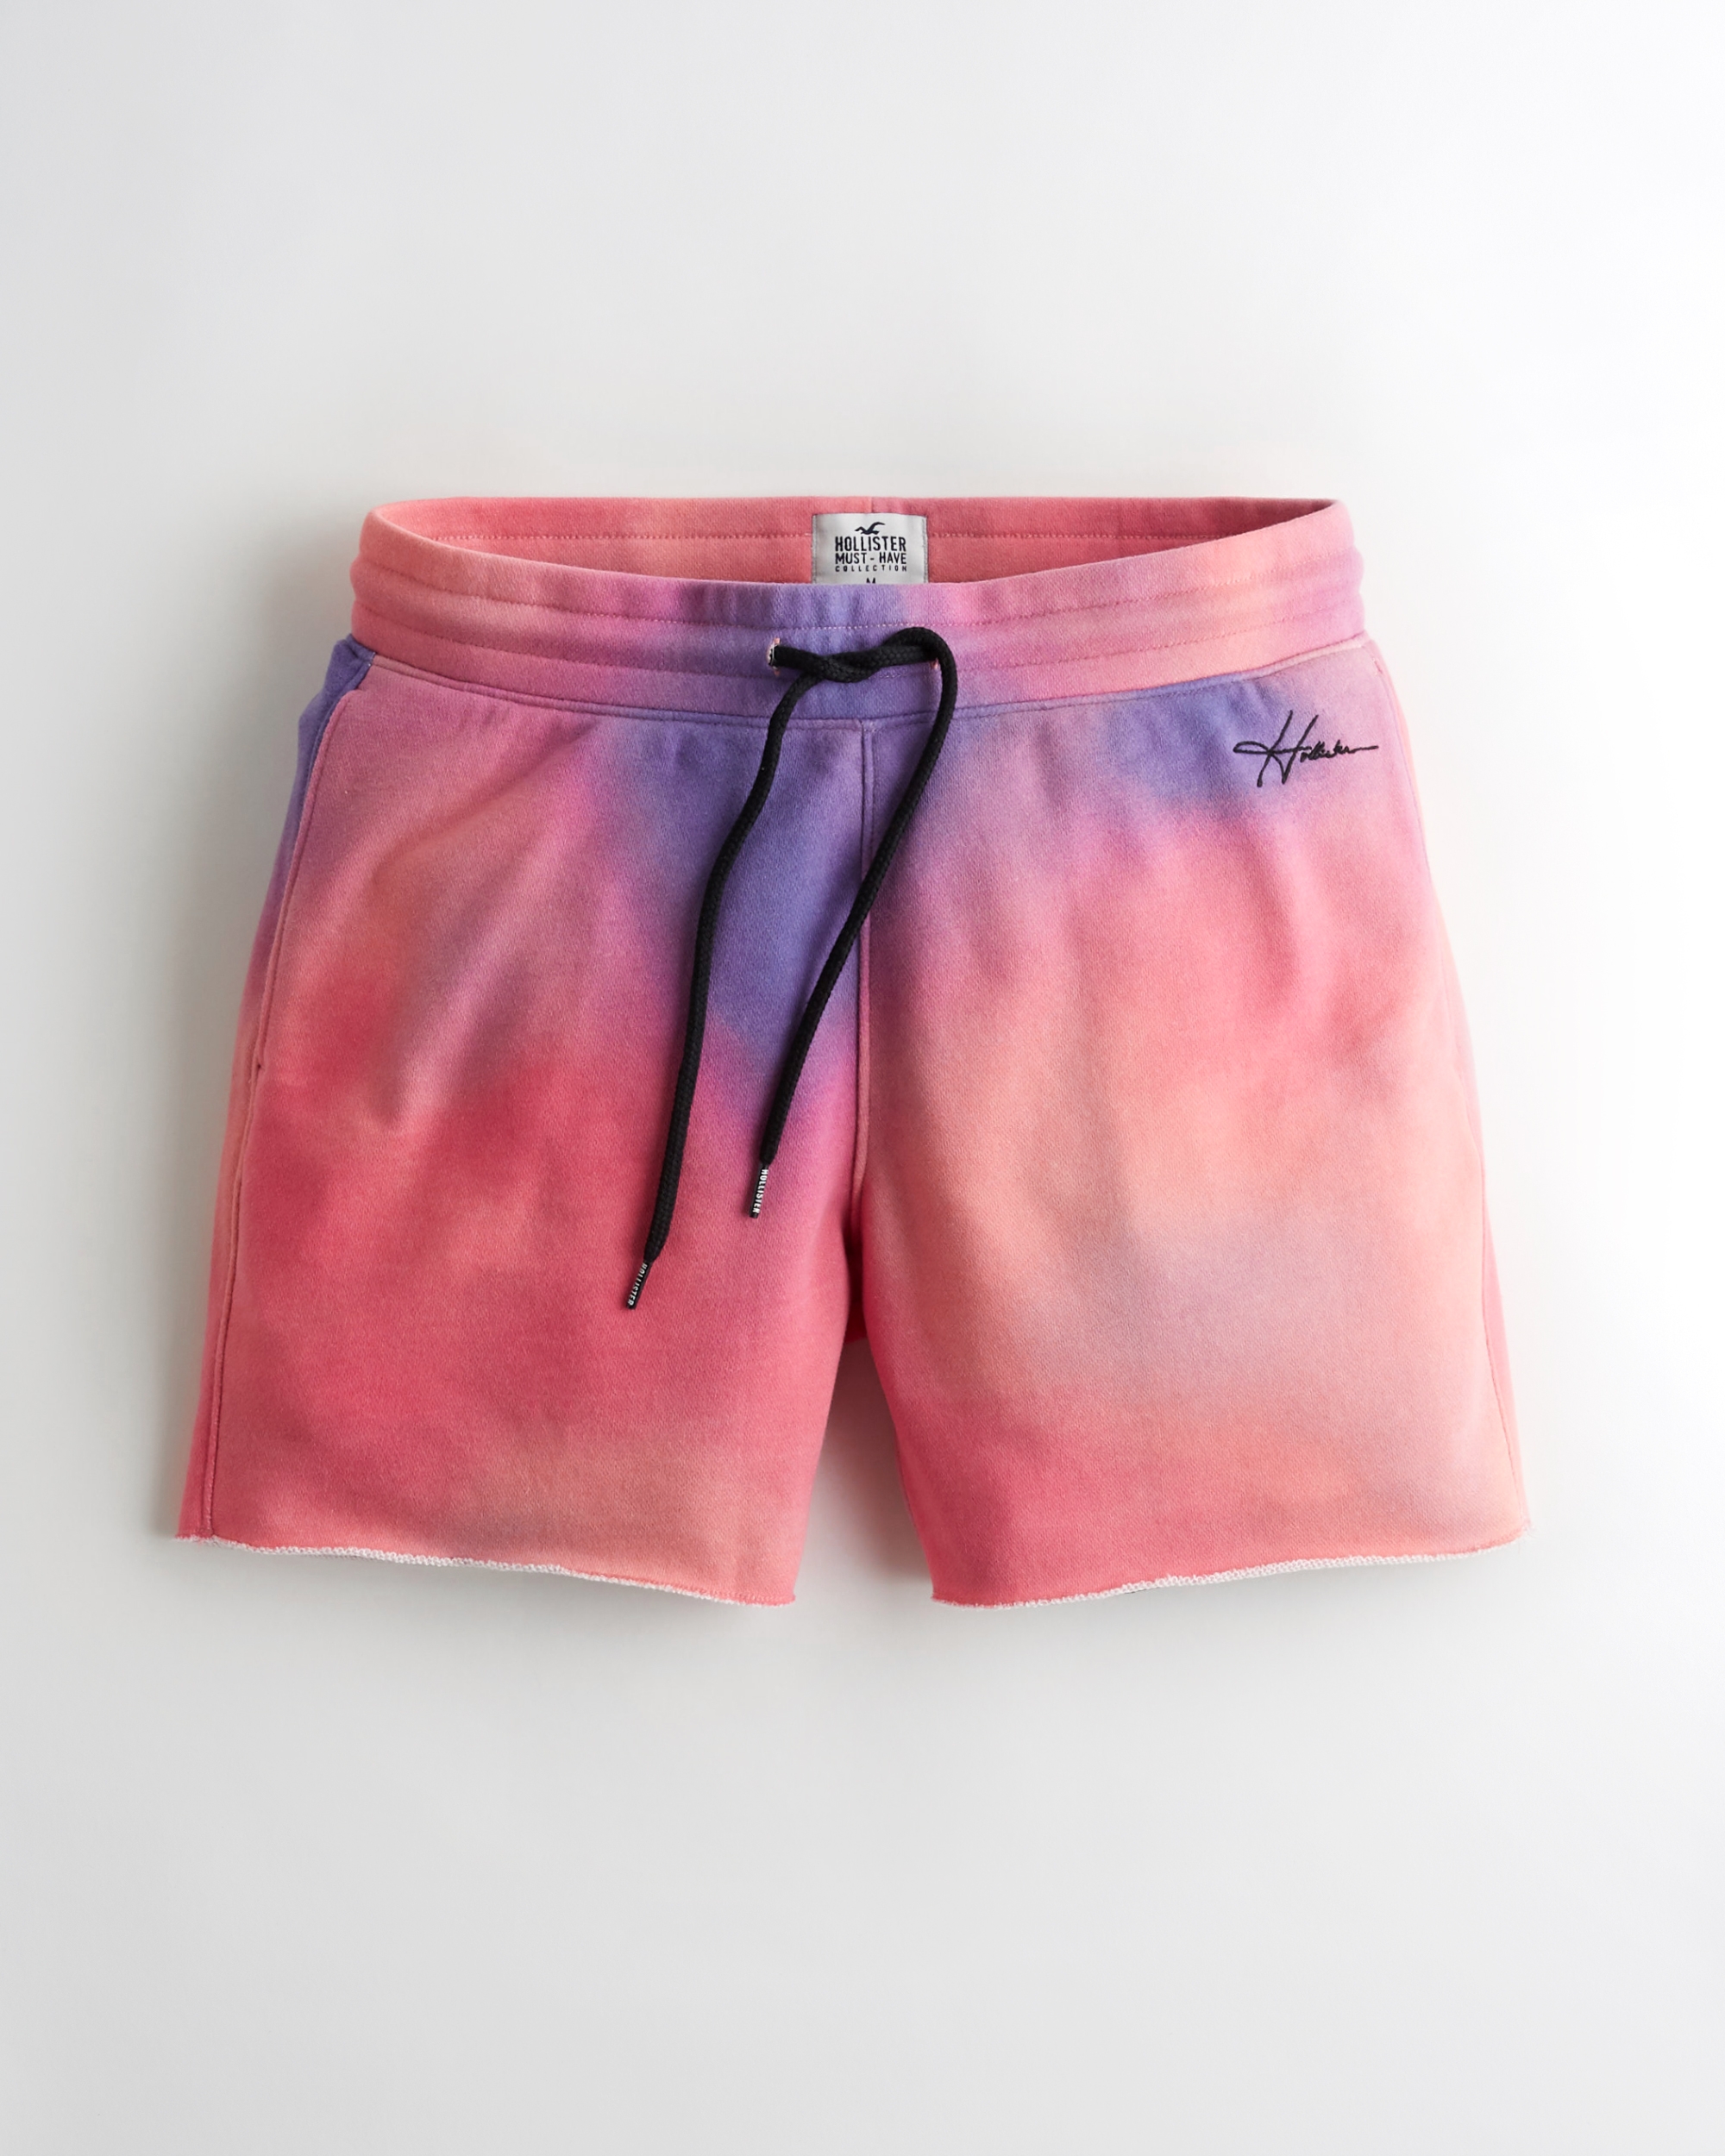 hollister beach prep fit shorts